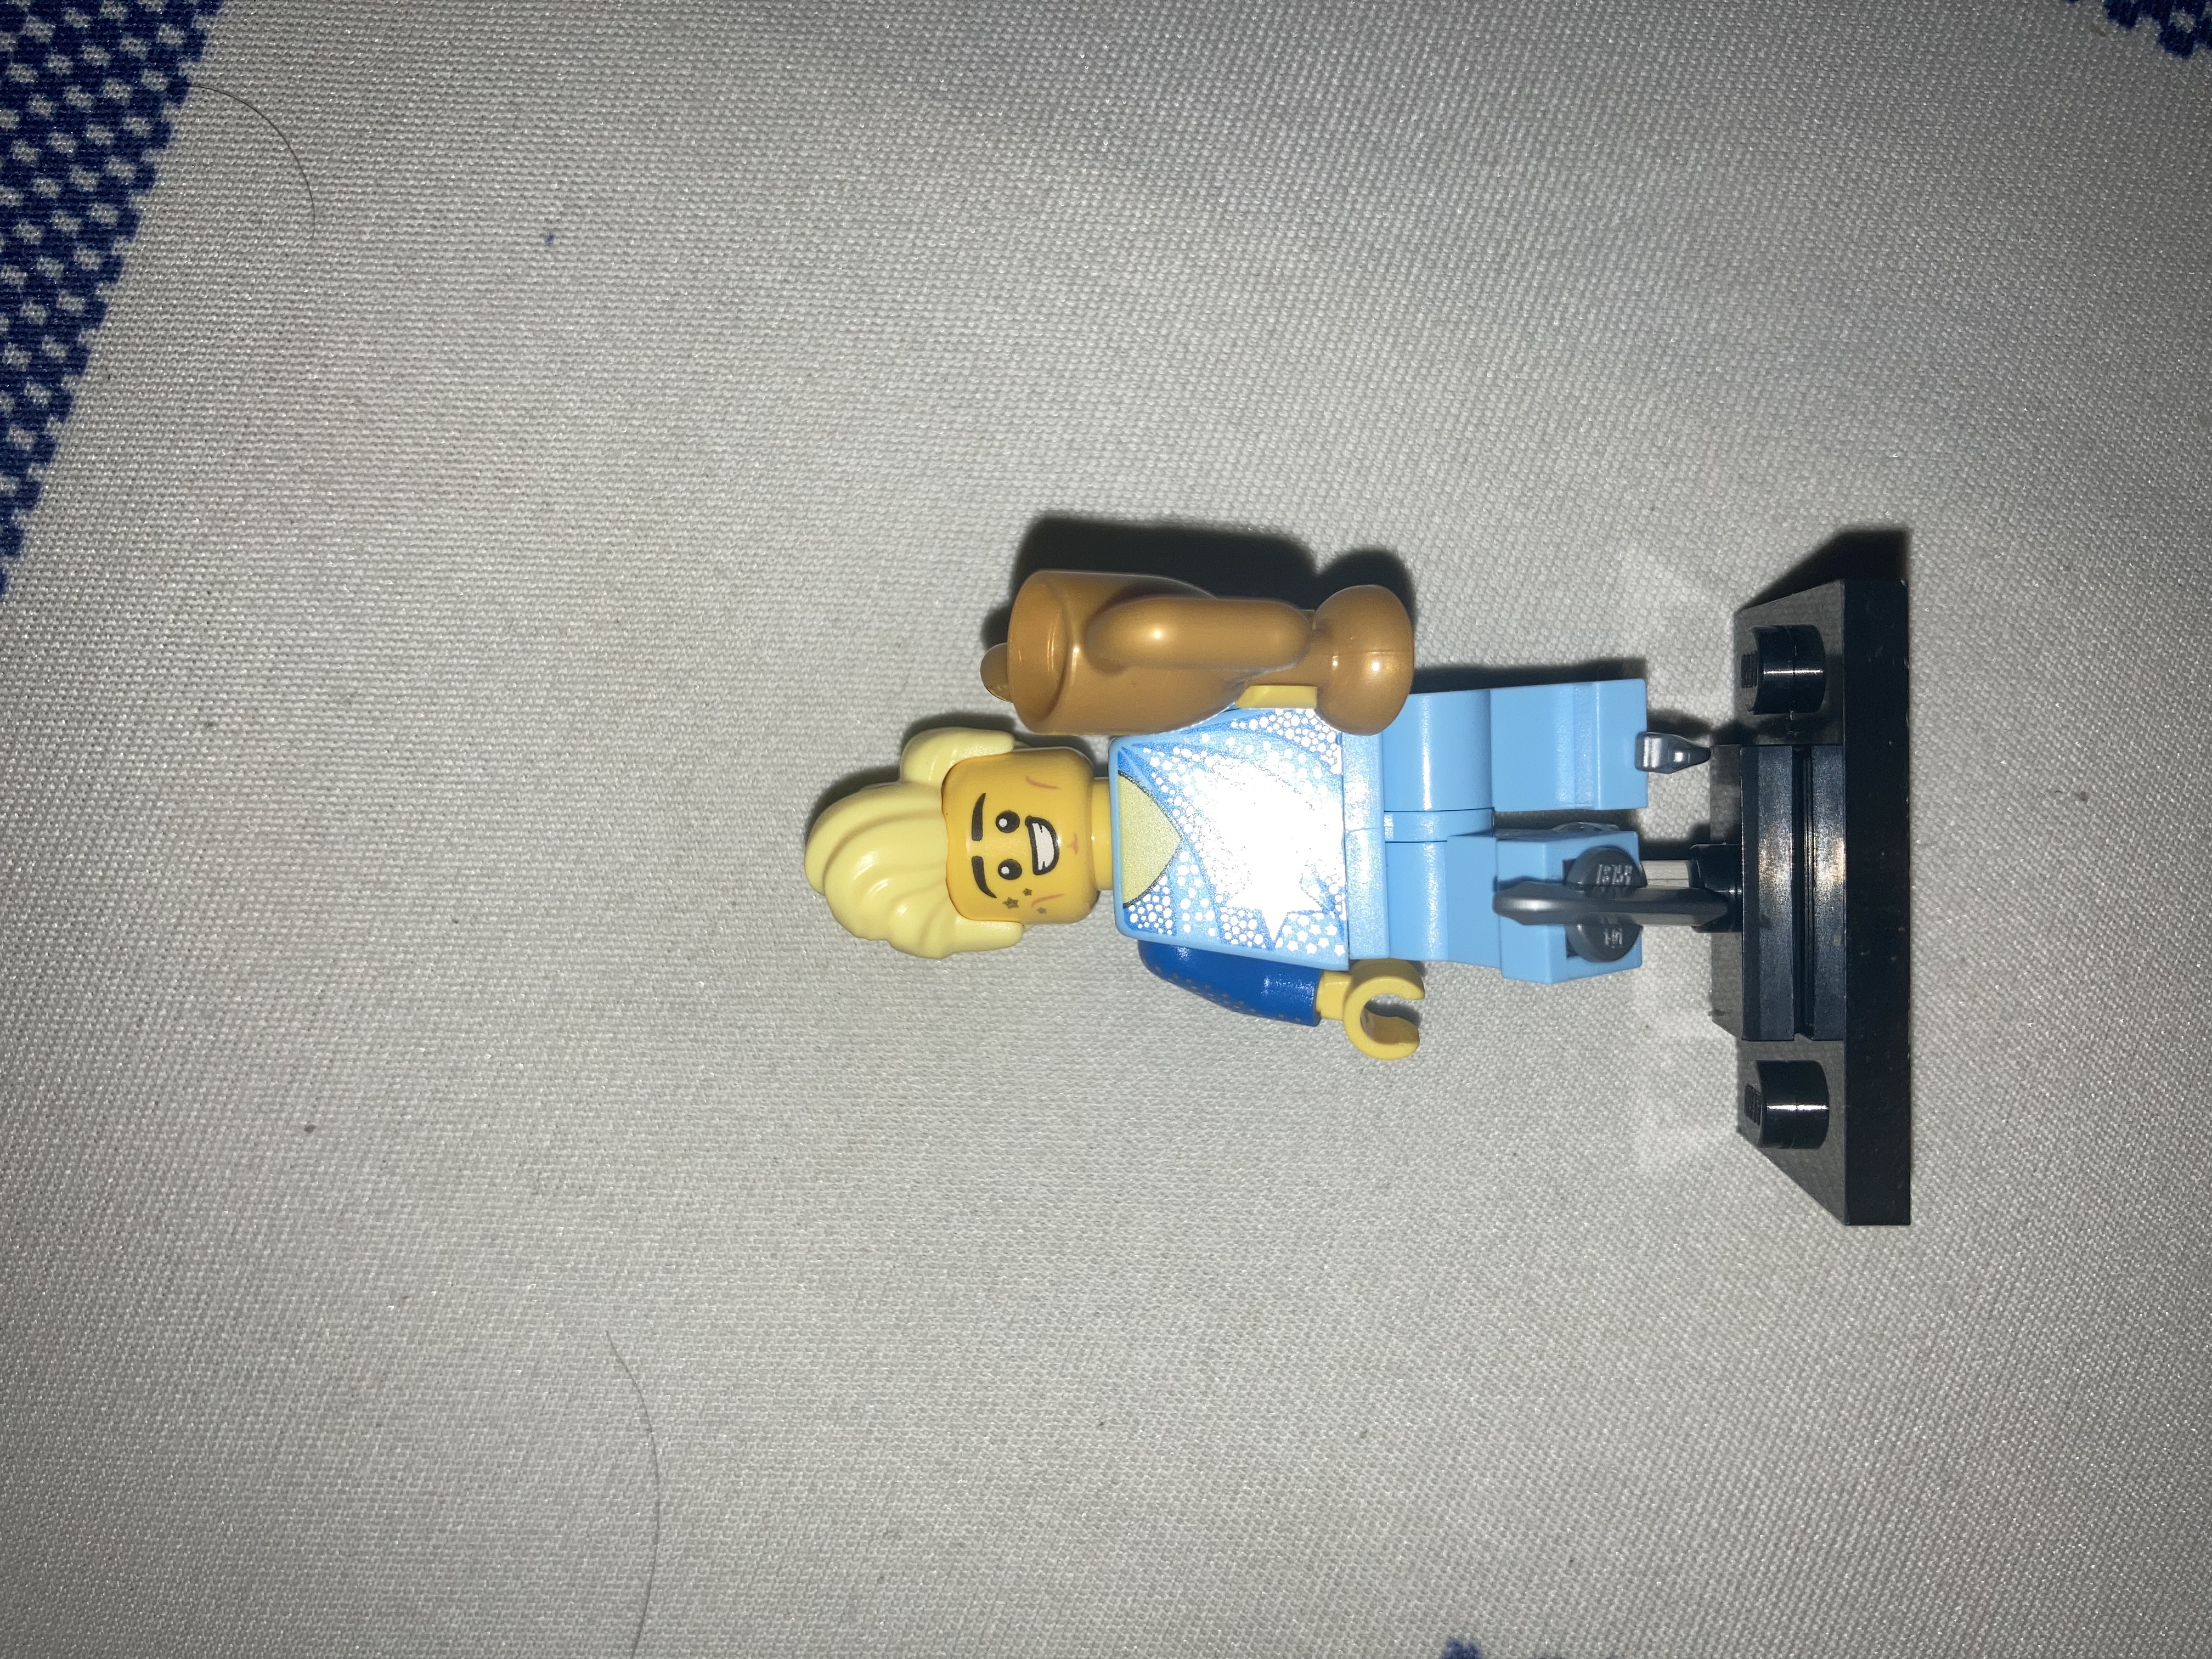 1 nhan vat Lego Minifigure series 22 Nhân vật Lego minifigure